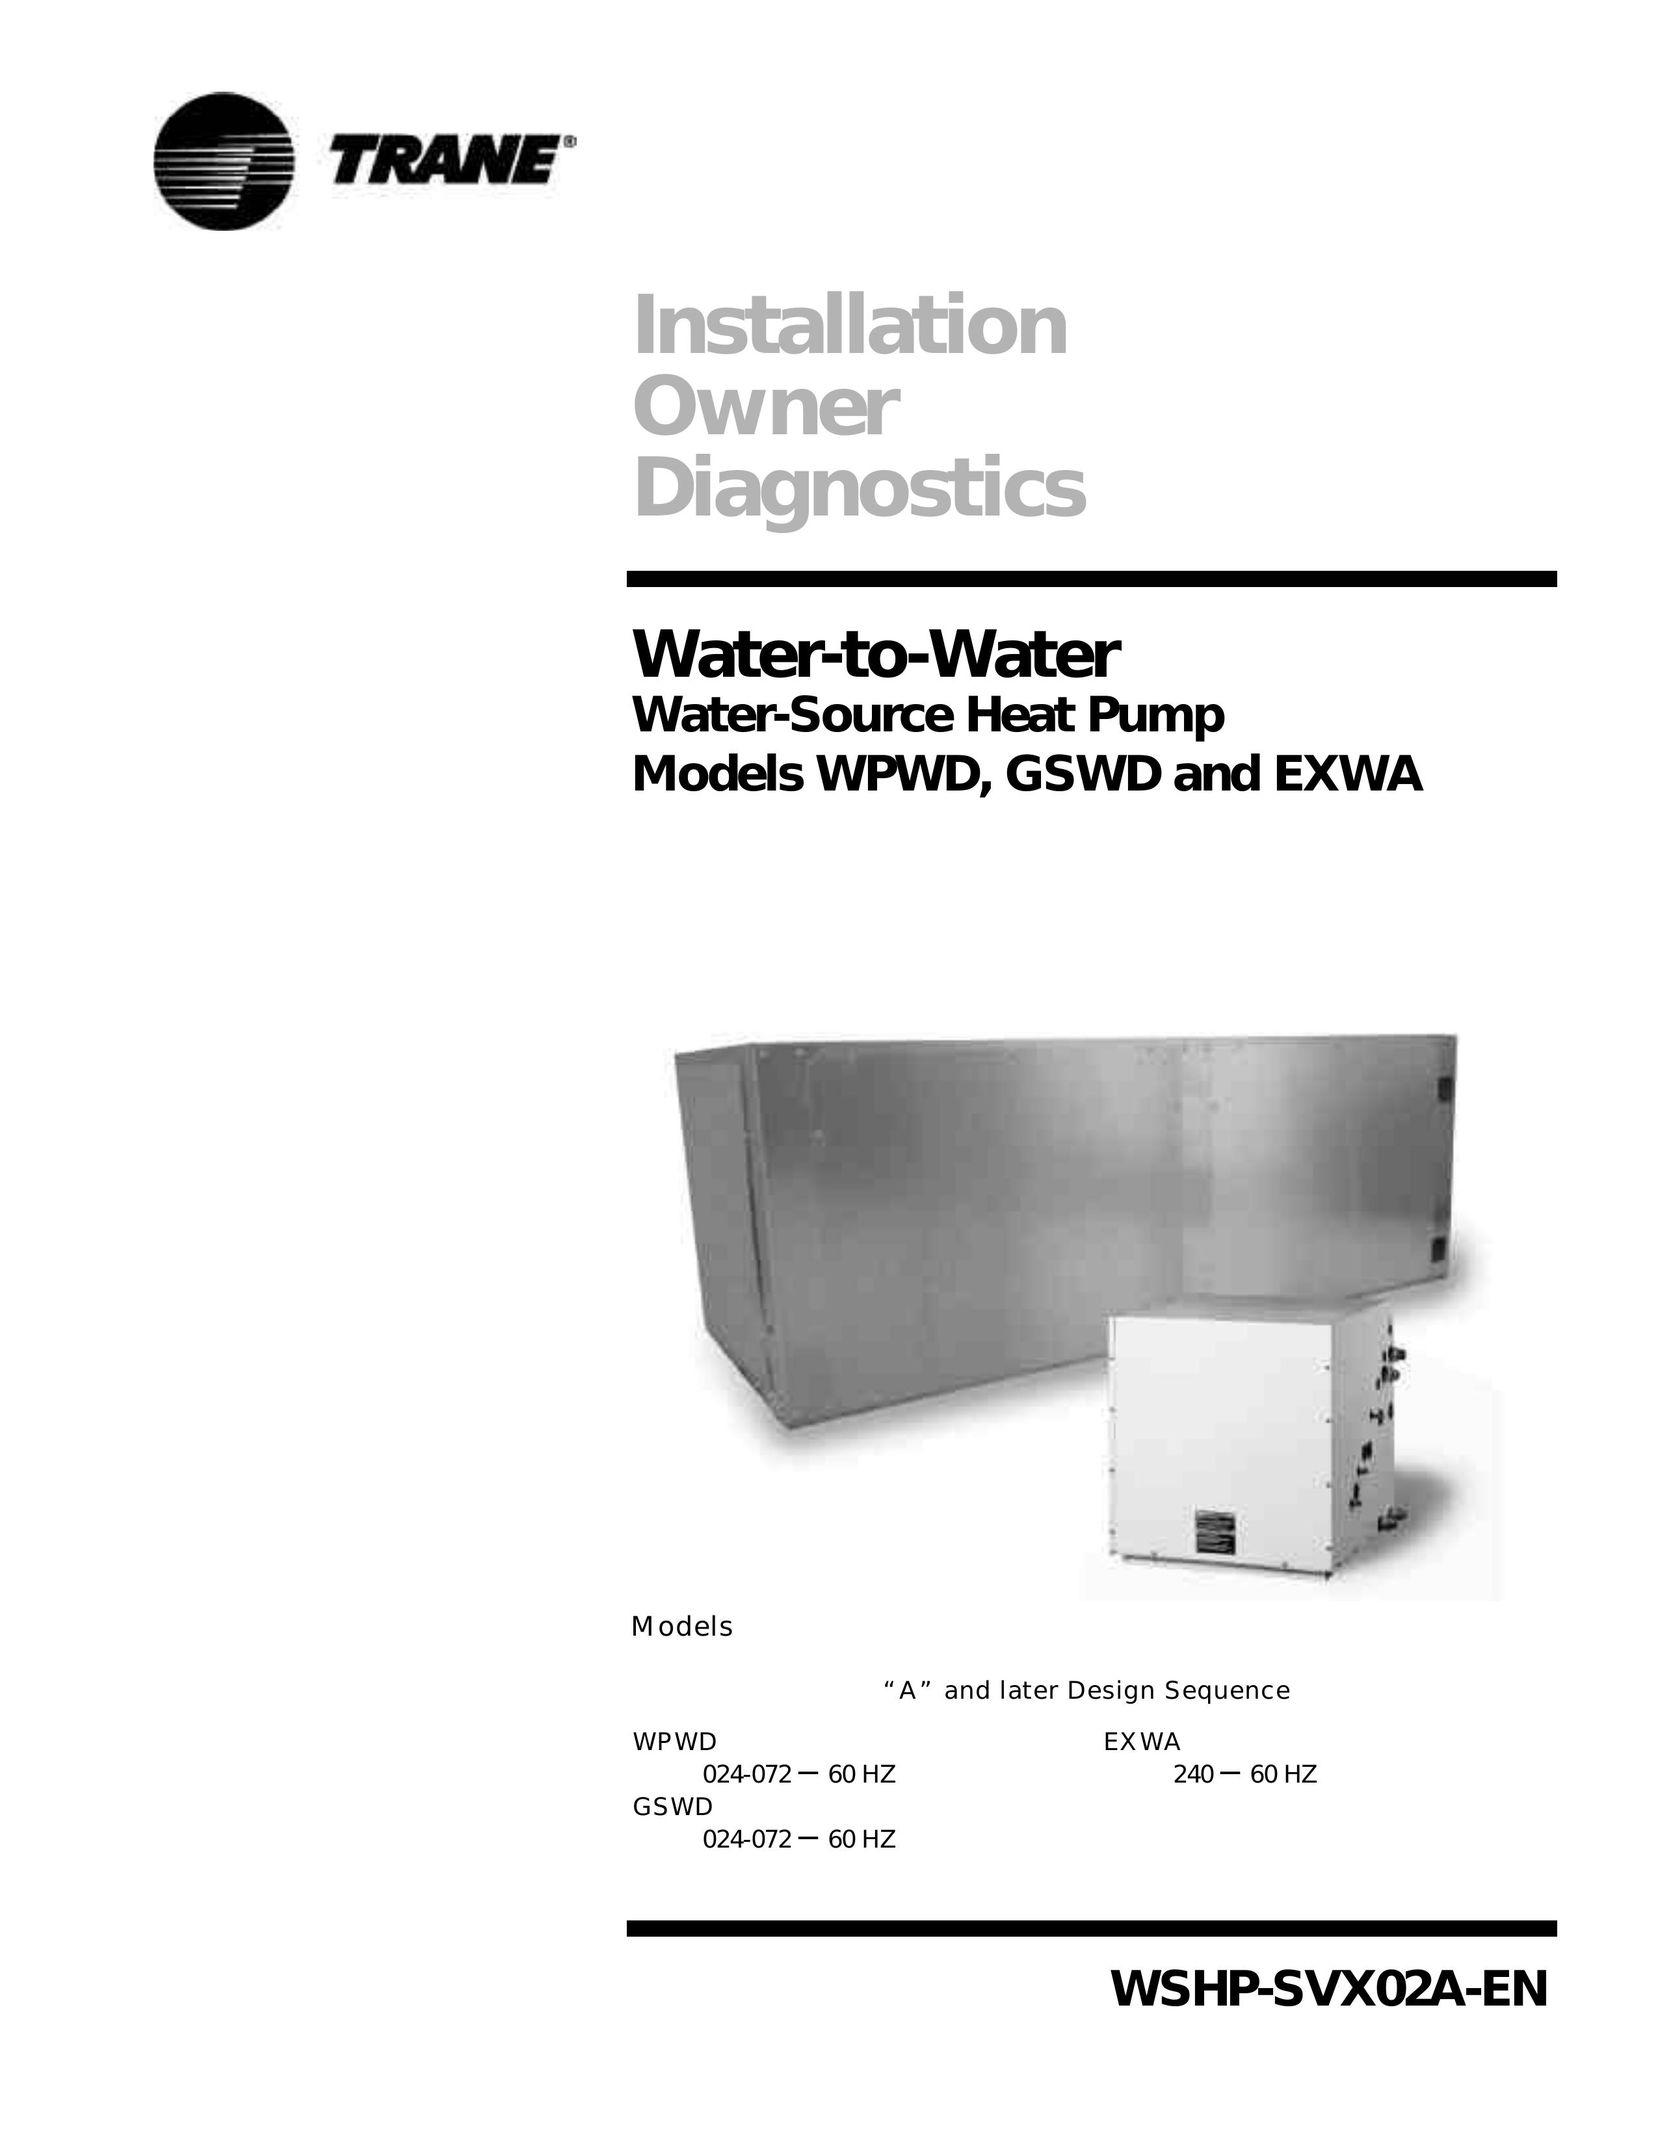 Trane EXWA Heat Pump User Manual